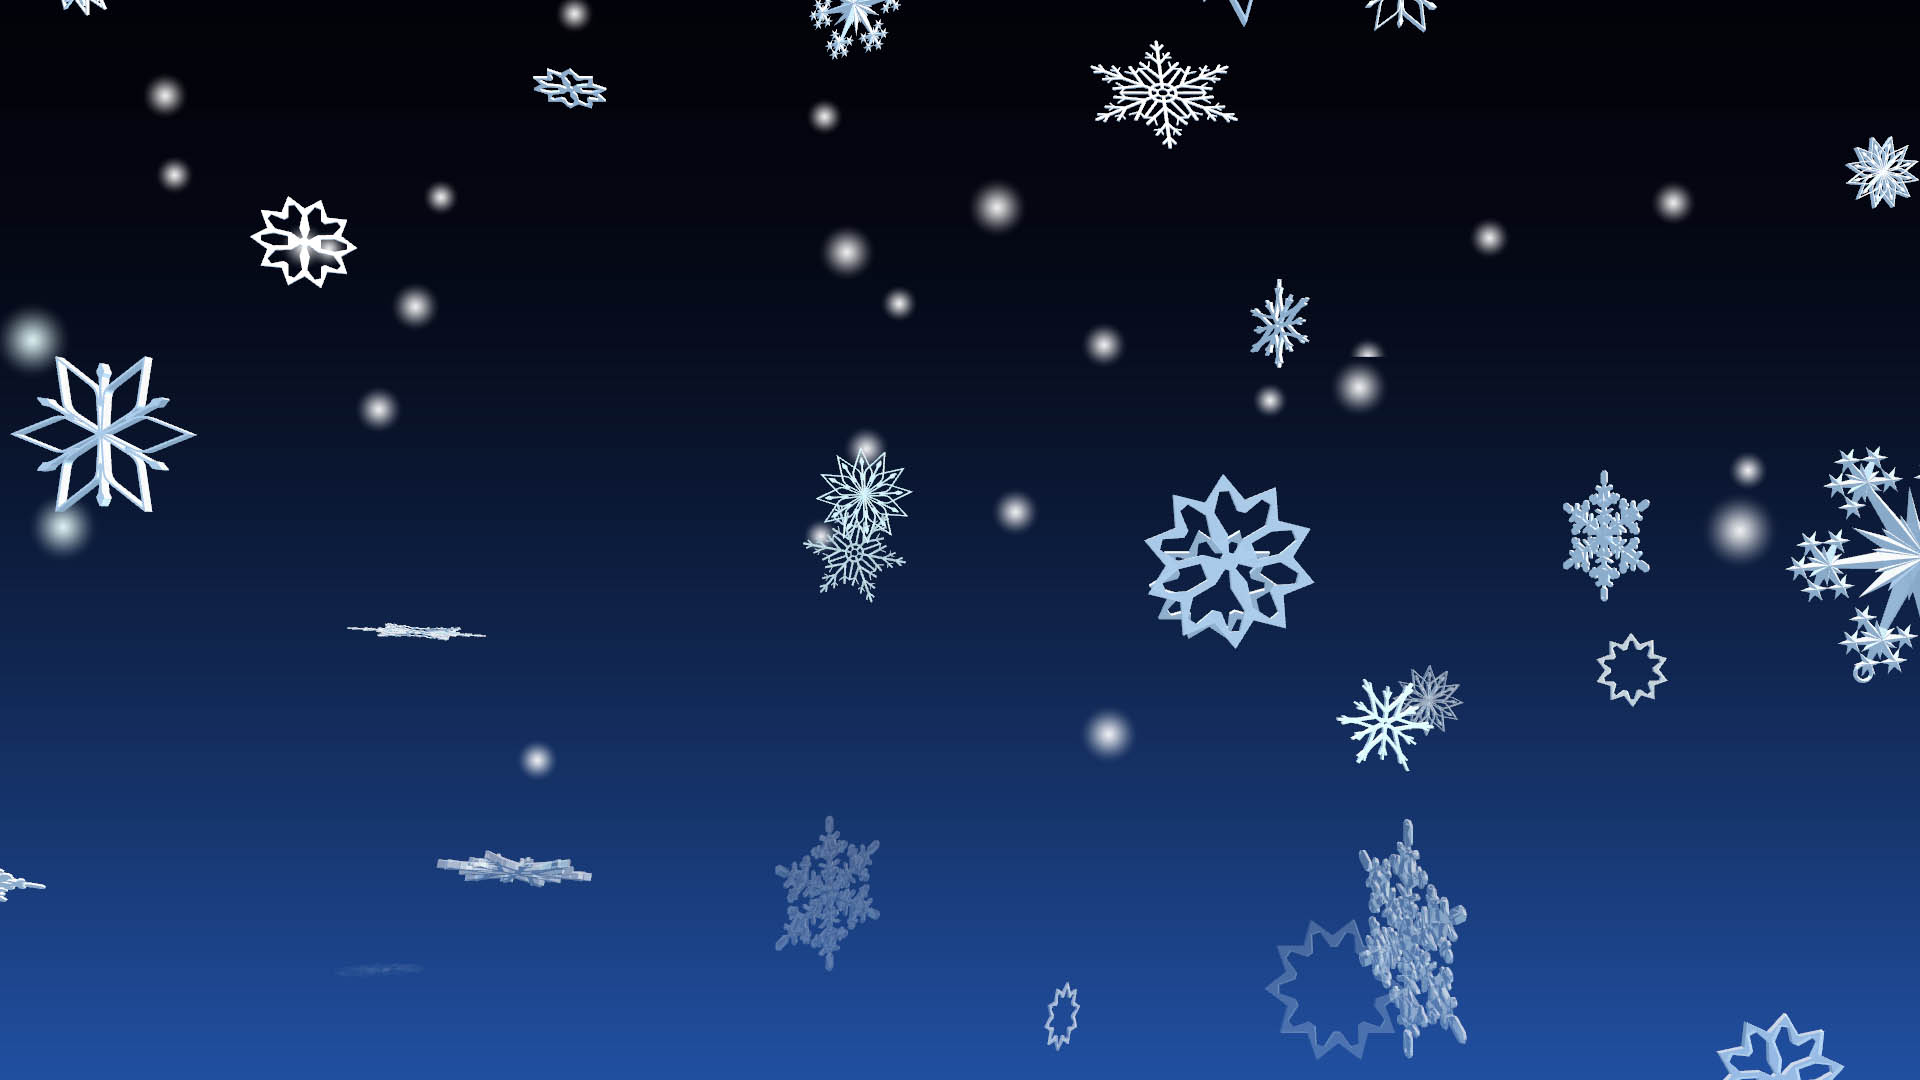 3D Winter Snowflakes Screensaver for Windows - 3D Snowflakes Screensaver